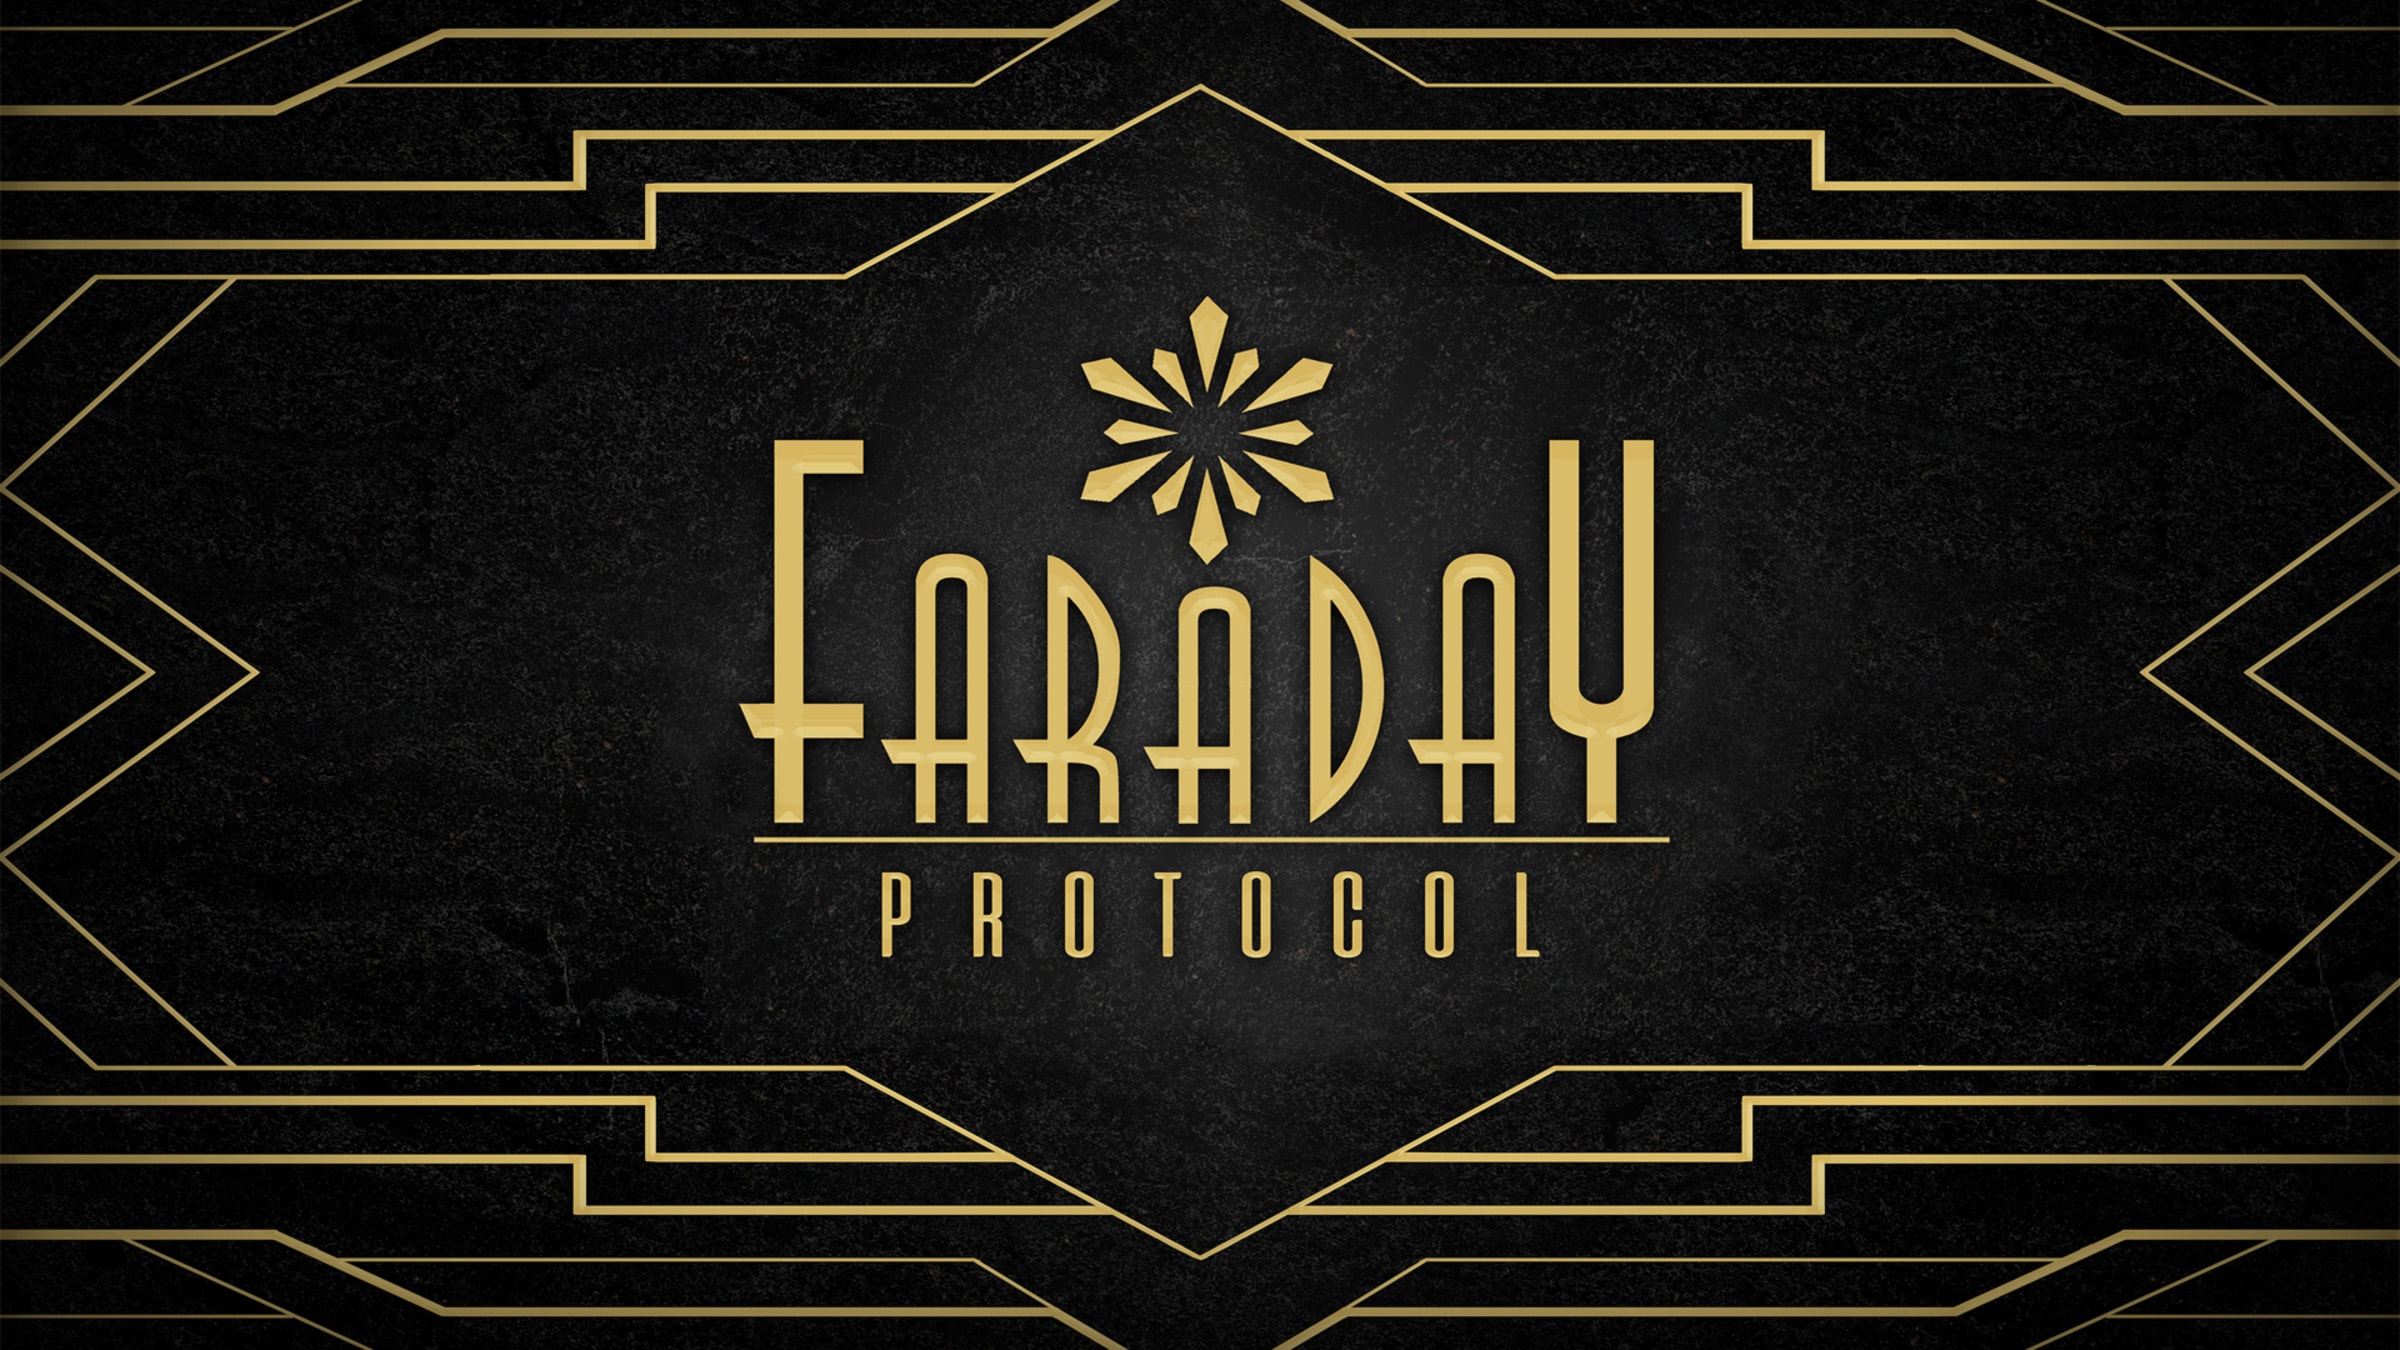 Faraday Protocol for Nintendo Switch - Nintendo Official Site